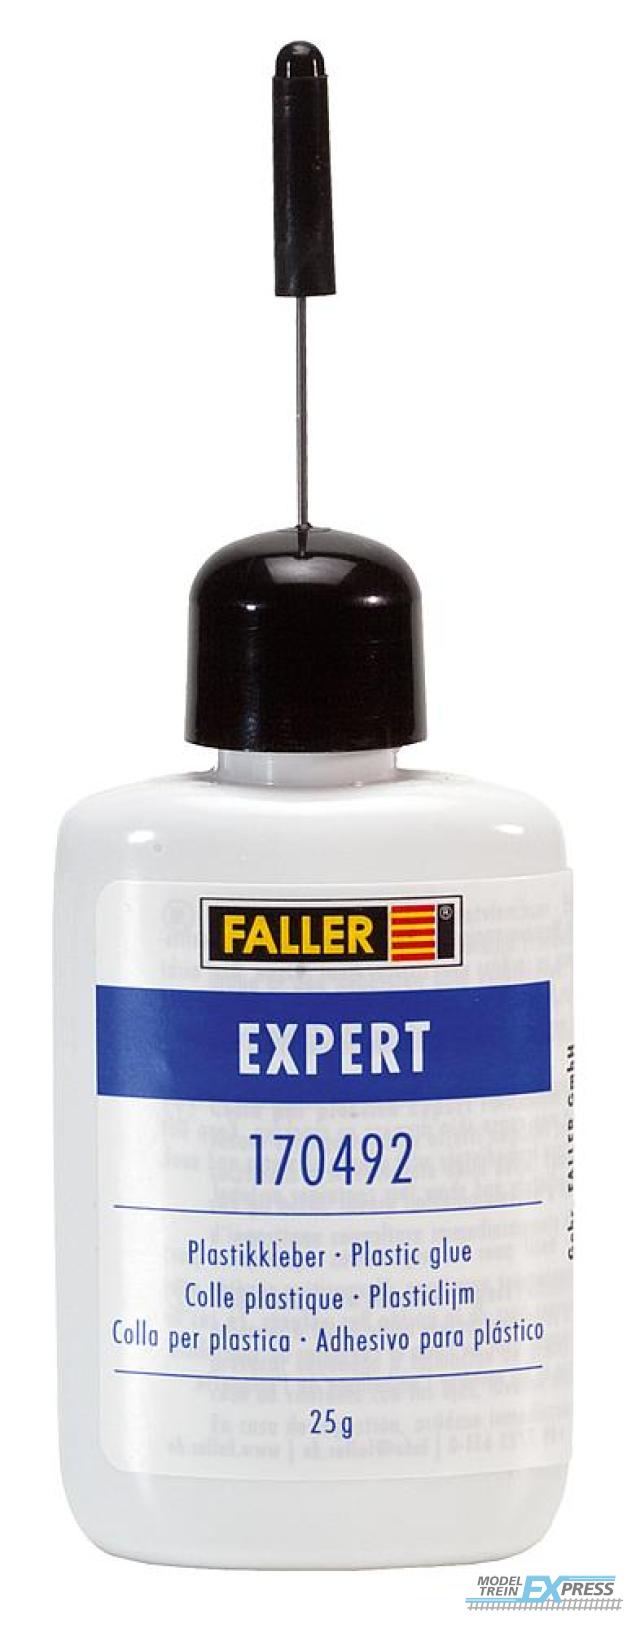 Faller 170492 EXPERT PLASTICLIJM 25 G